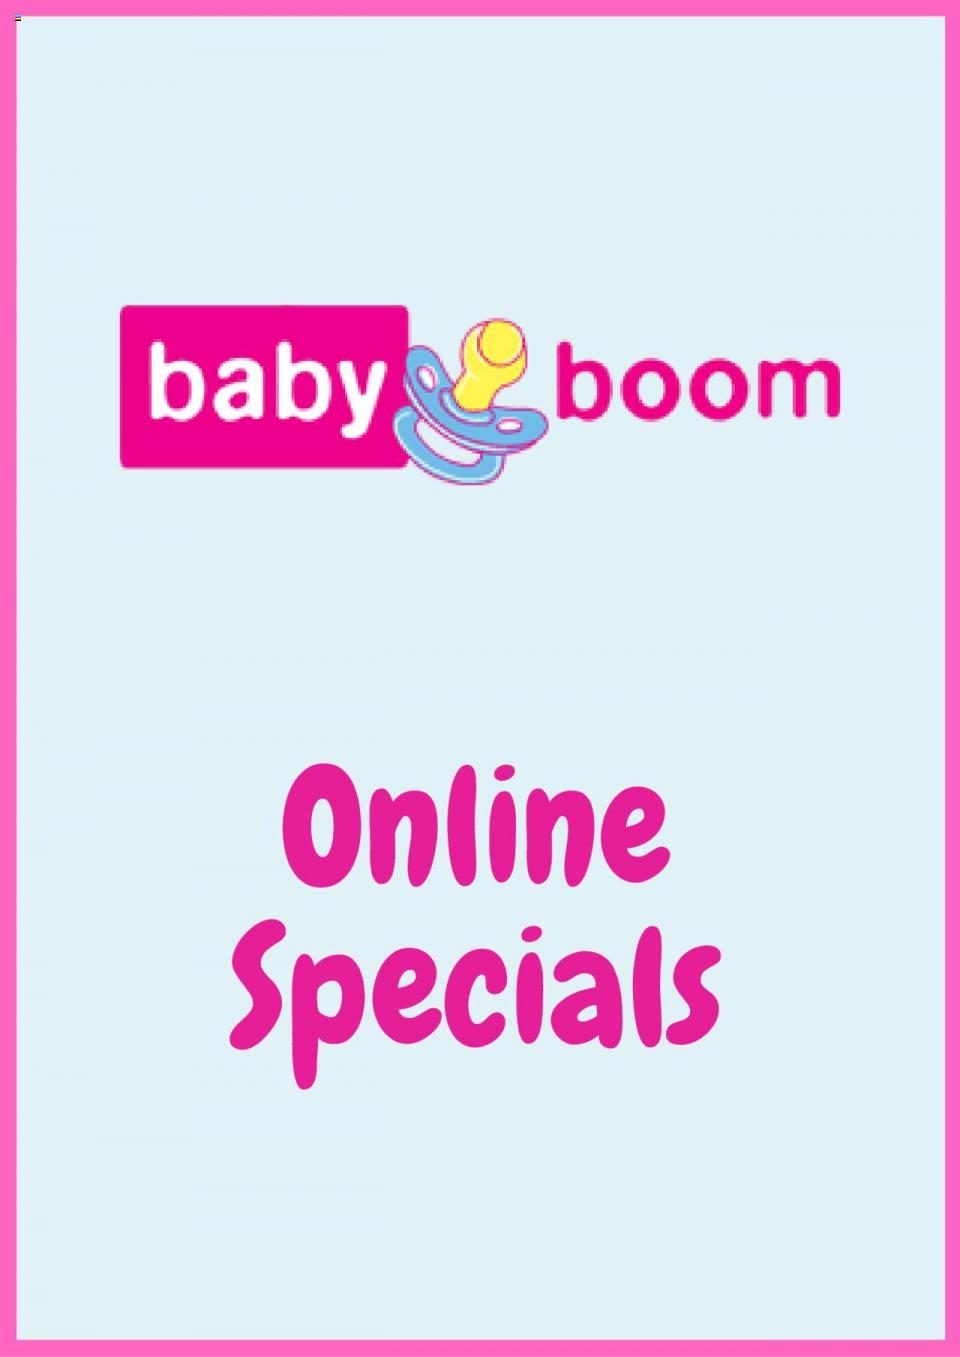 baby boom specials 5 may 2020